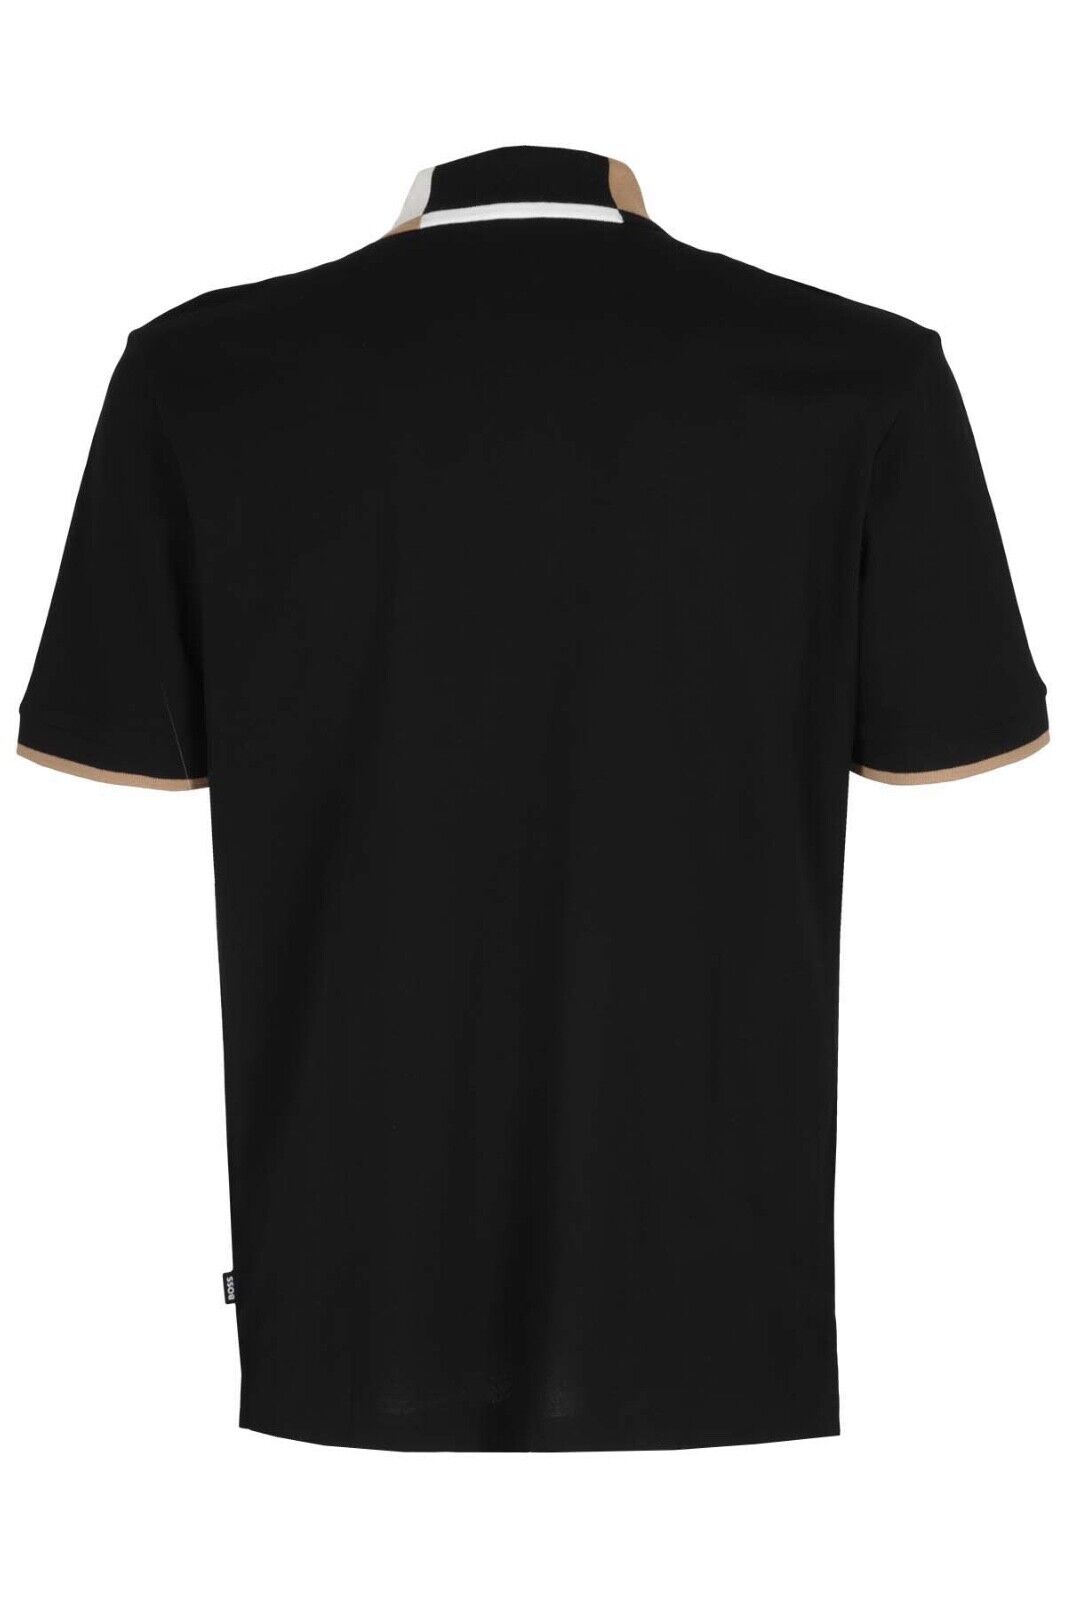 HUGO BOSS Parlay 177 Men’s Regular Fit Polo Shirt in Black 50488275 001